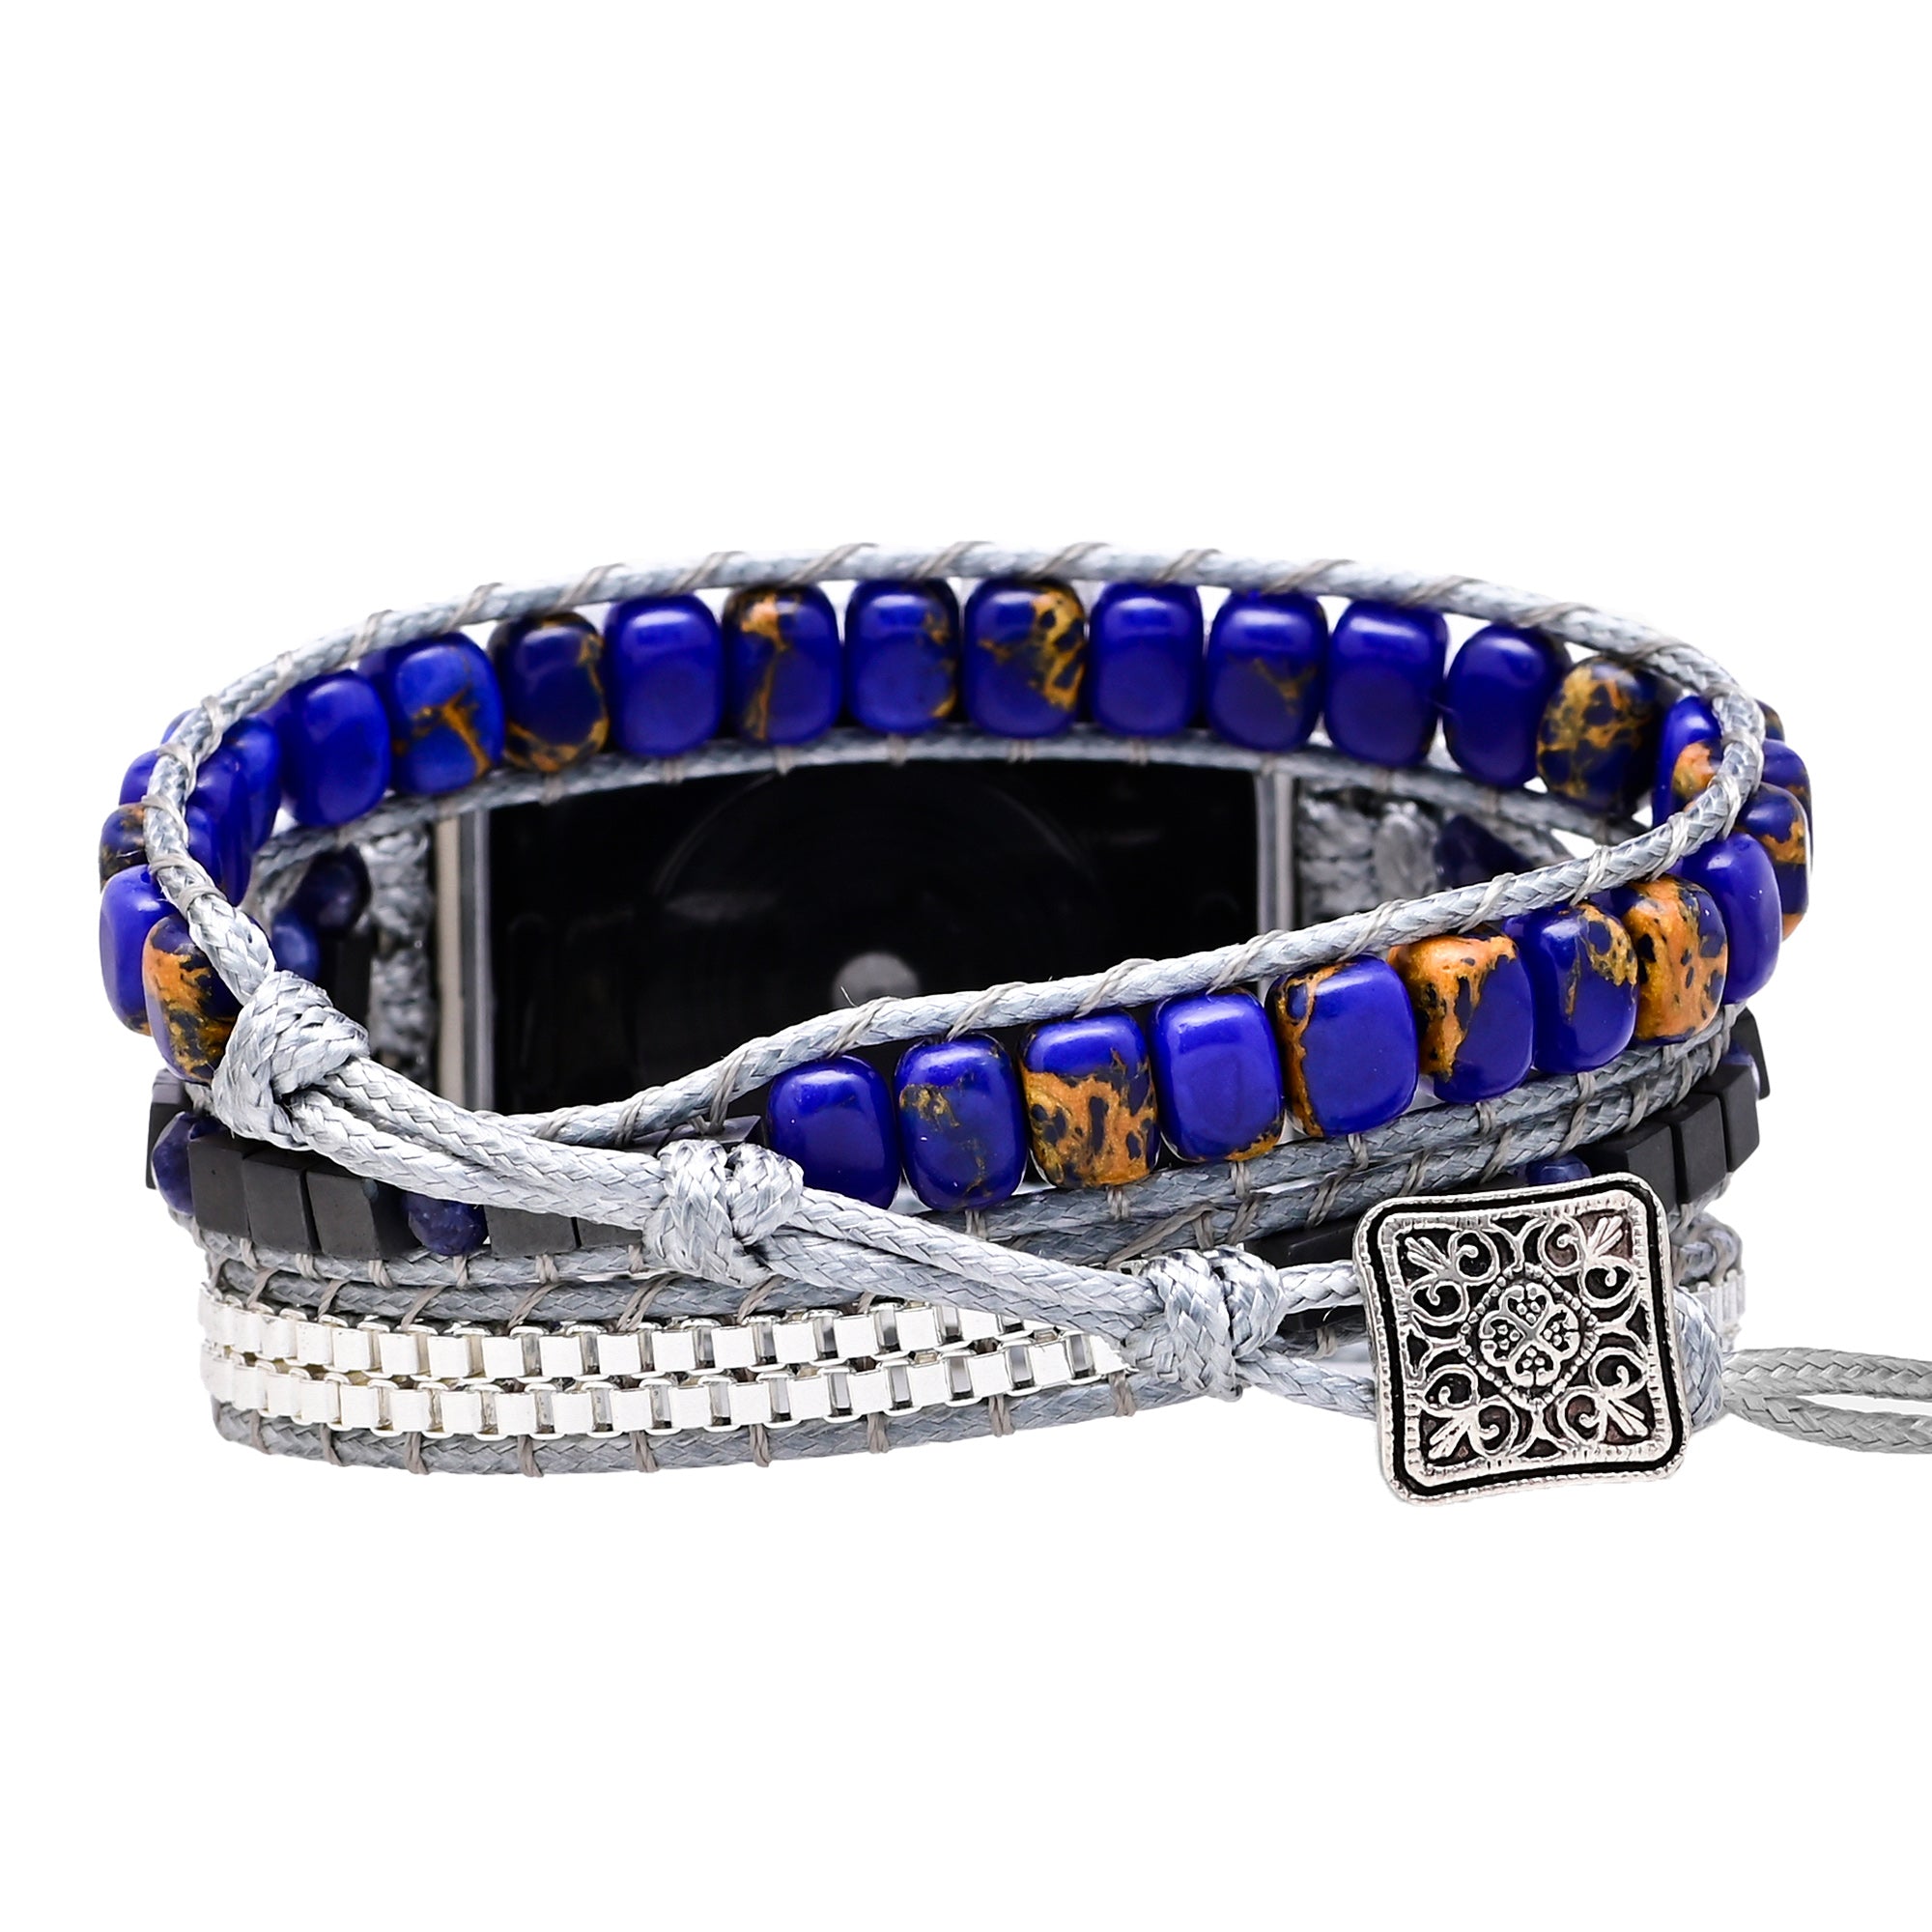 TEEPOLLO Handmade Stone Beads Etsy Apple Watch Band Blue